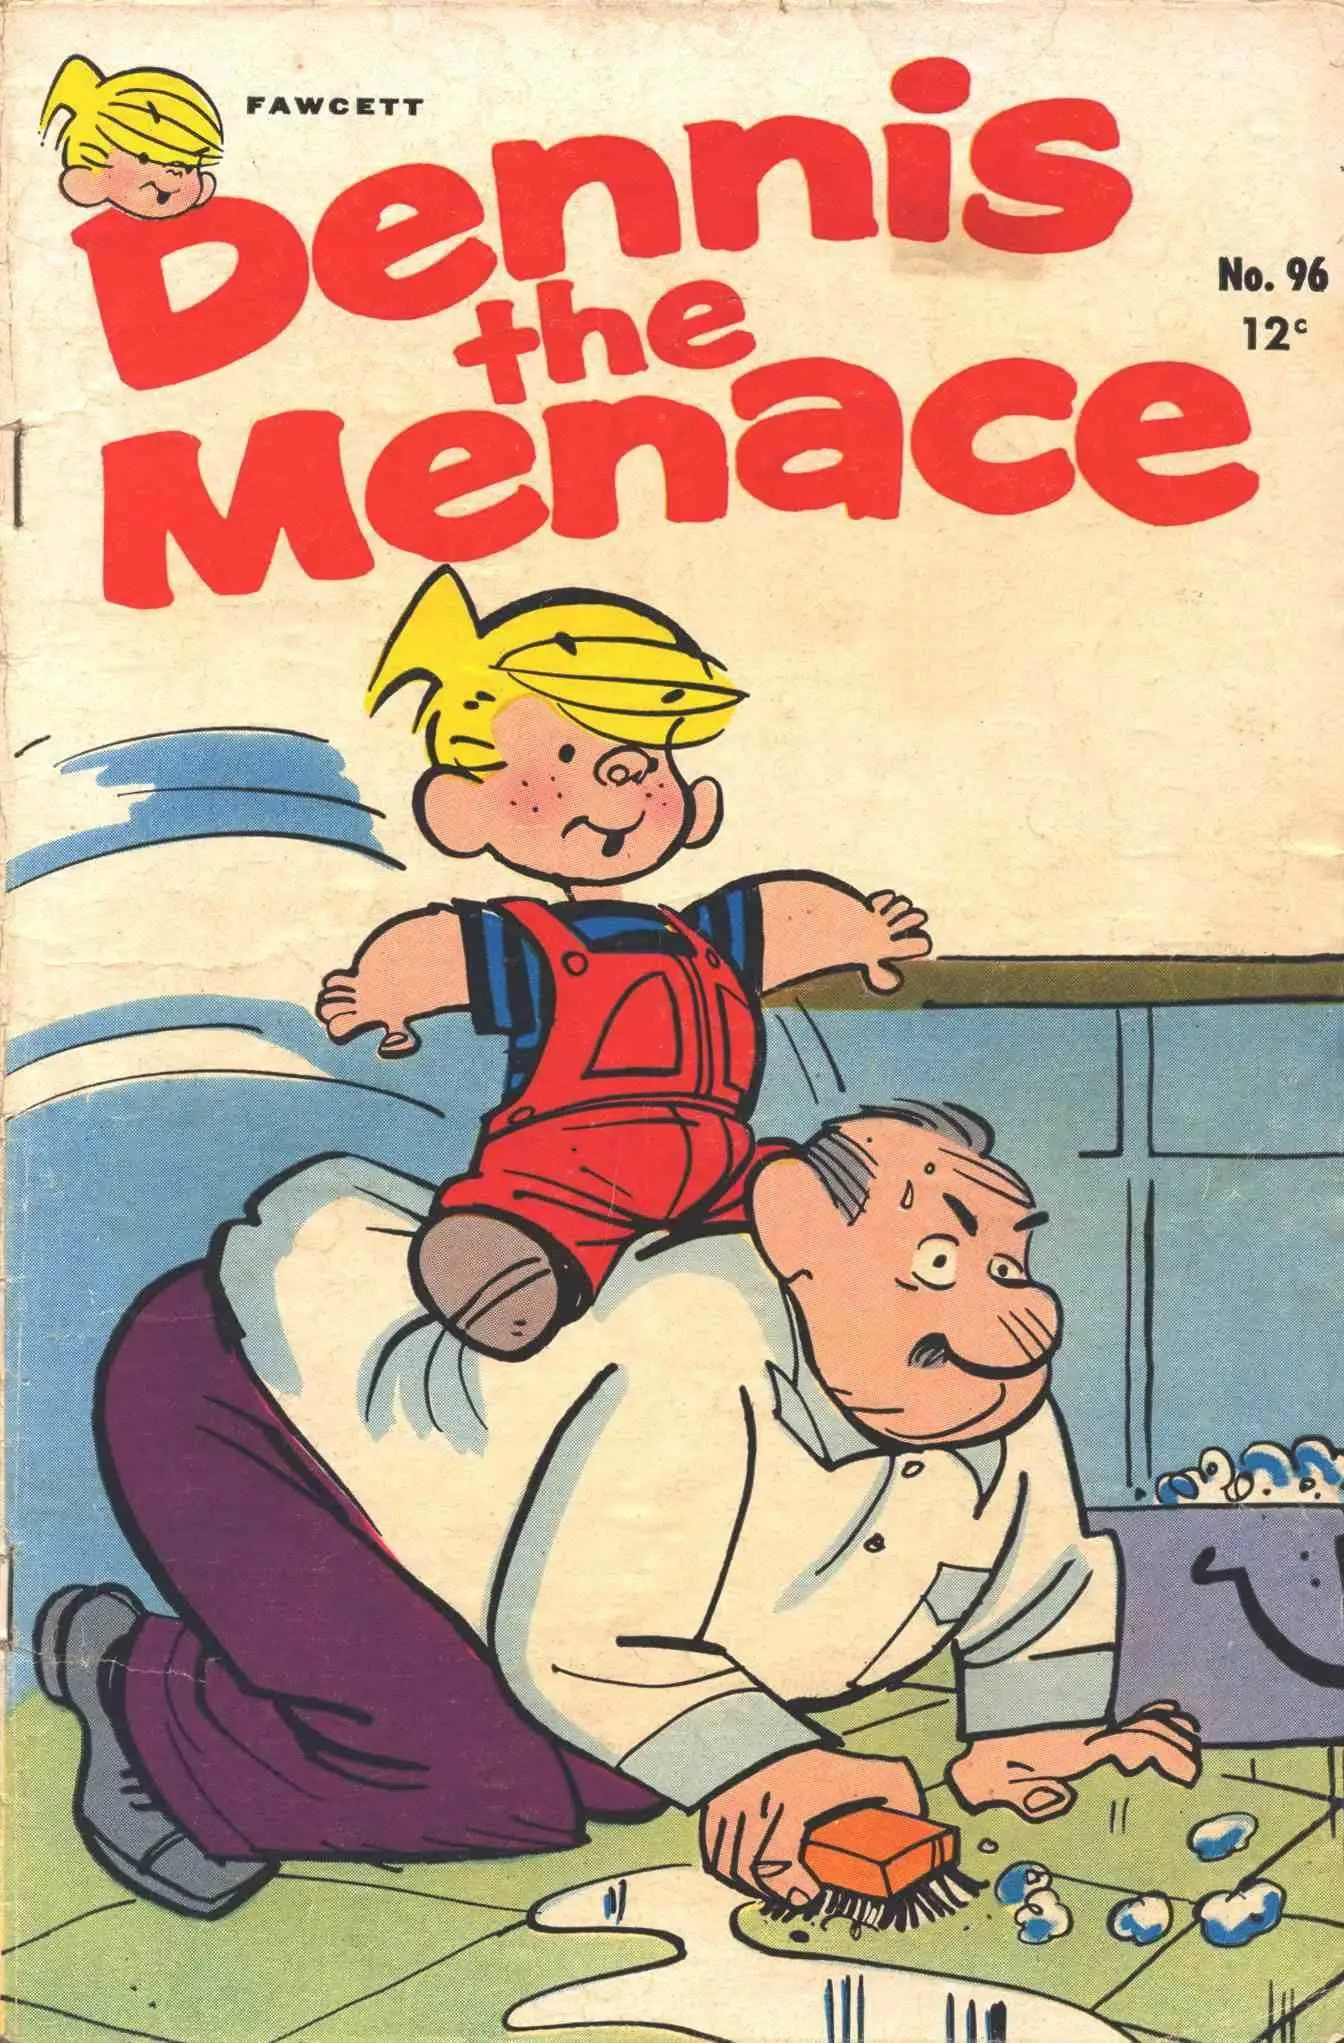 Show me a reason denis the menace. Комикс Dennis the Menace. Деннис мучитель комикс.